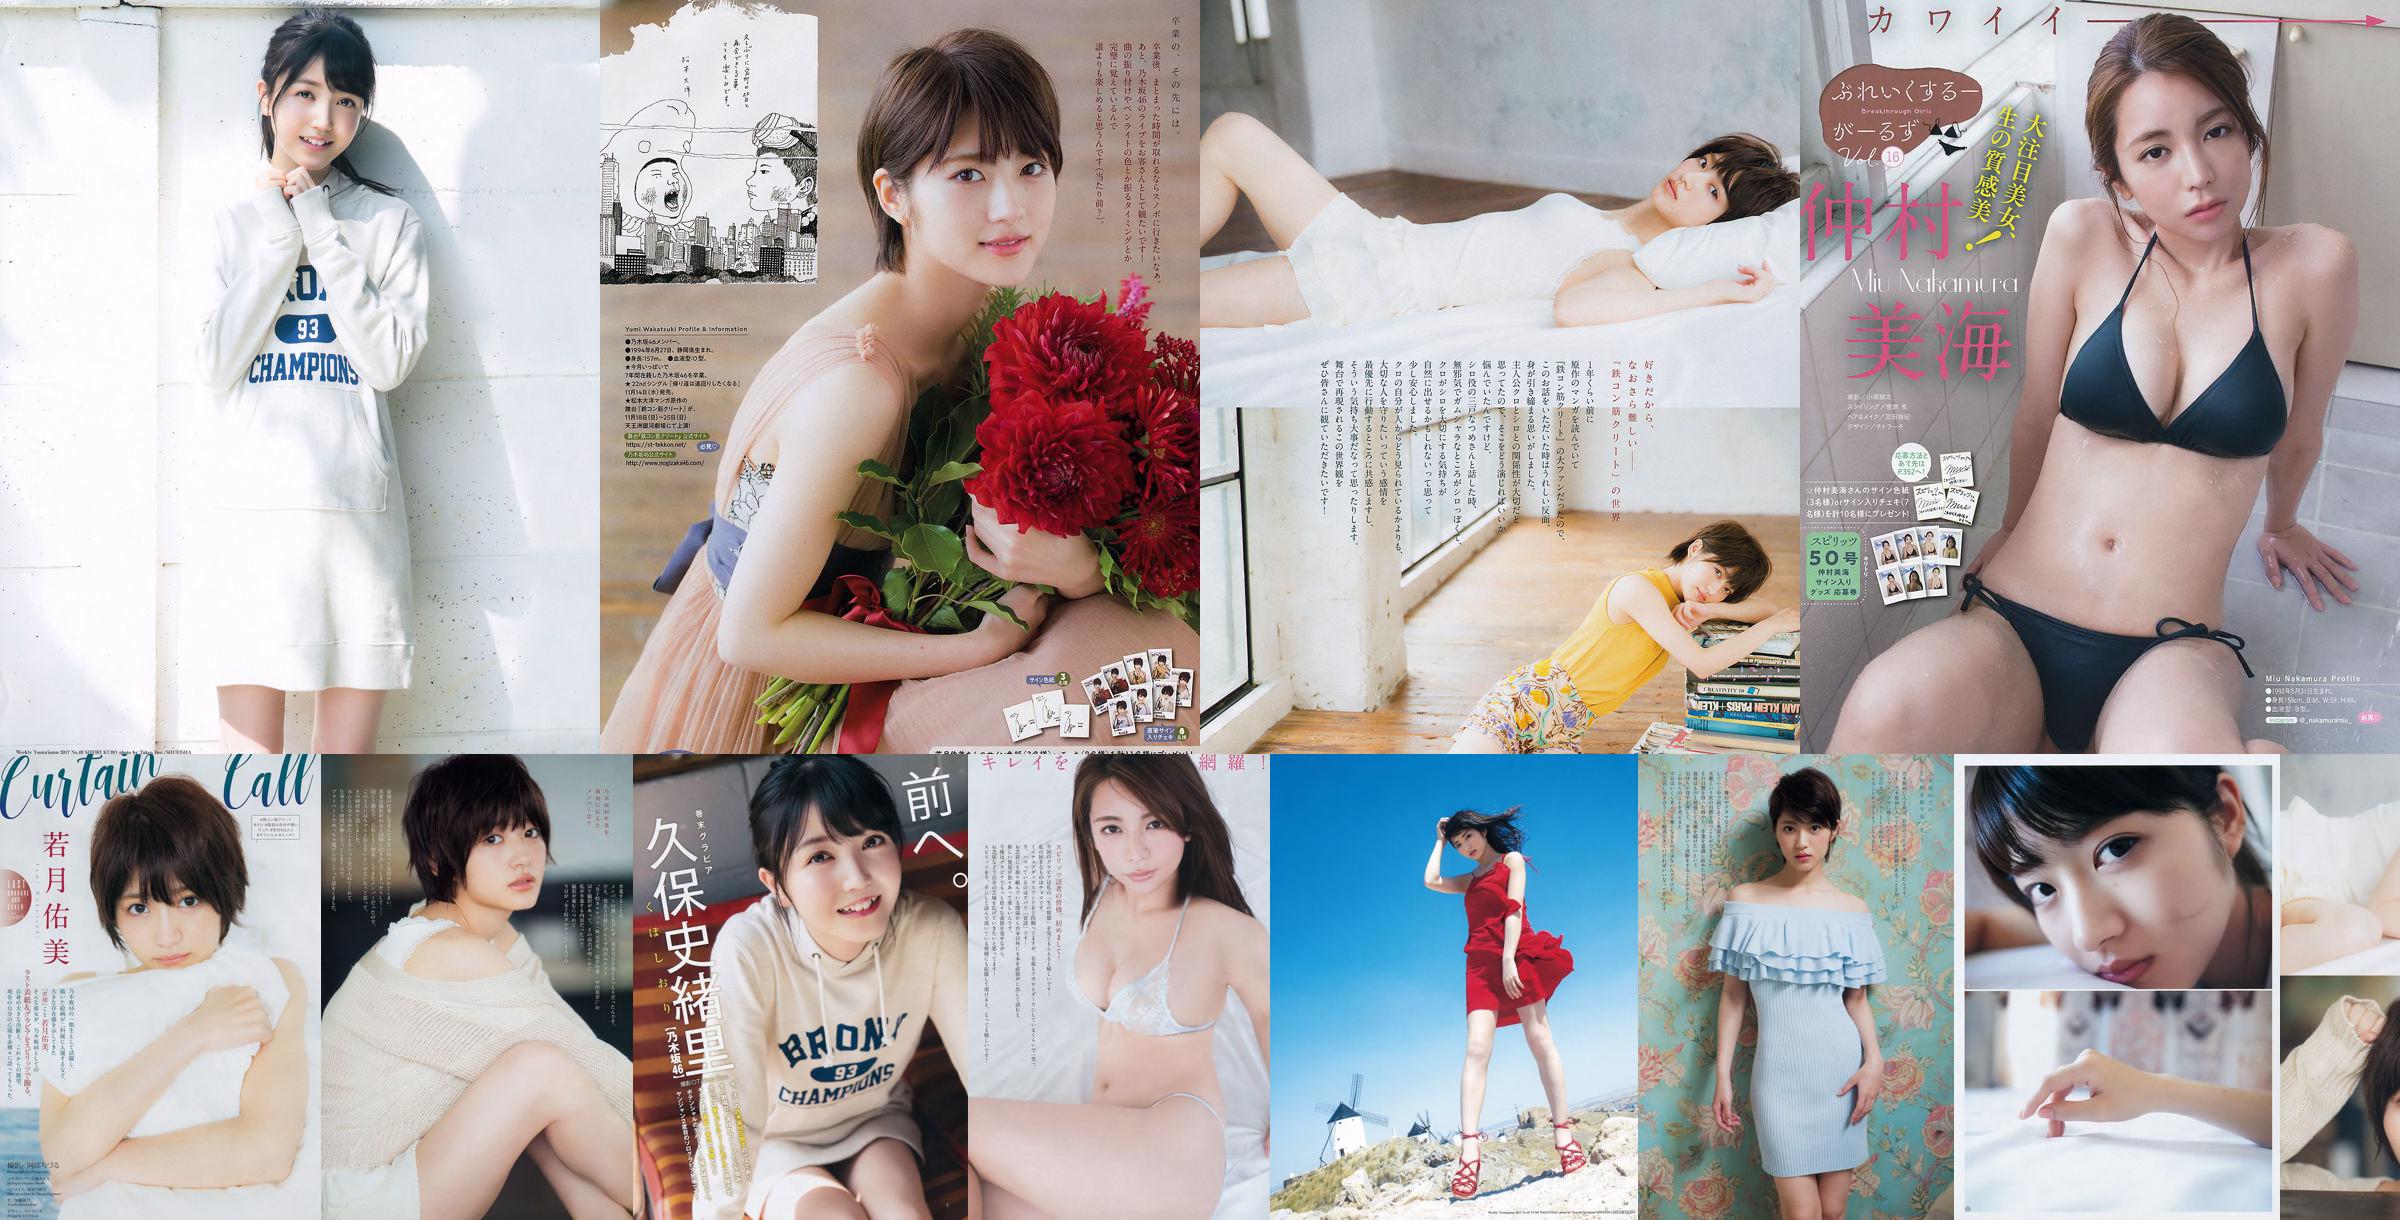 [Grands esprits de la bande dessinée hebdomadaire] Wakazuki Yumi Nakamura Mihai 2018 Magazine photo n ° 50 No.62aae5 Page 1